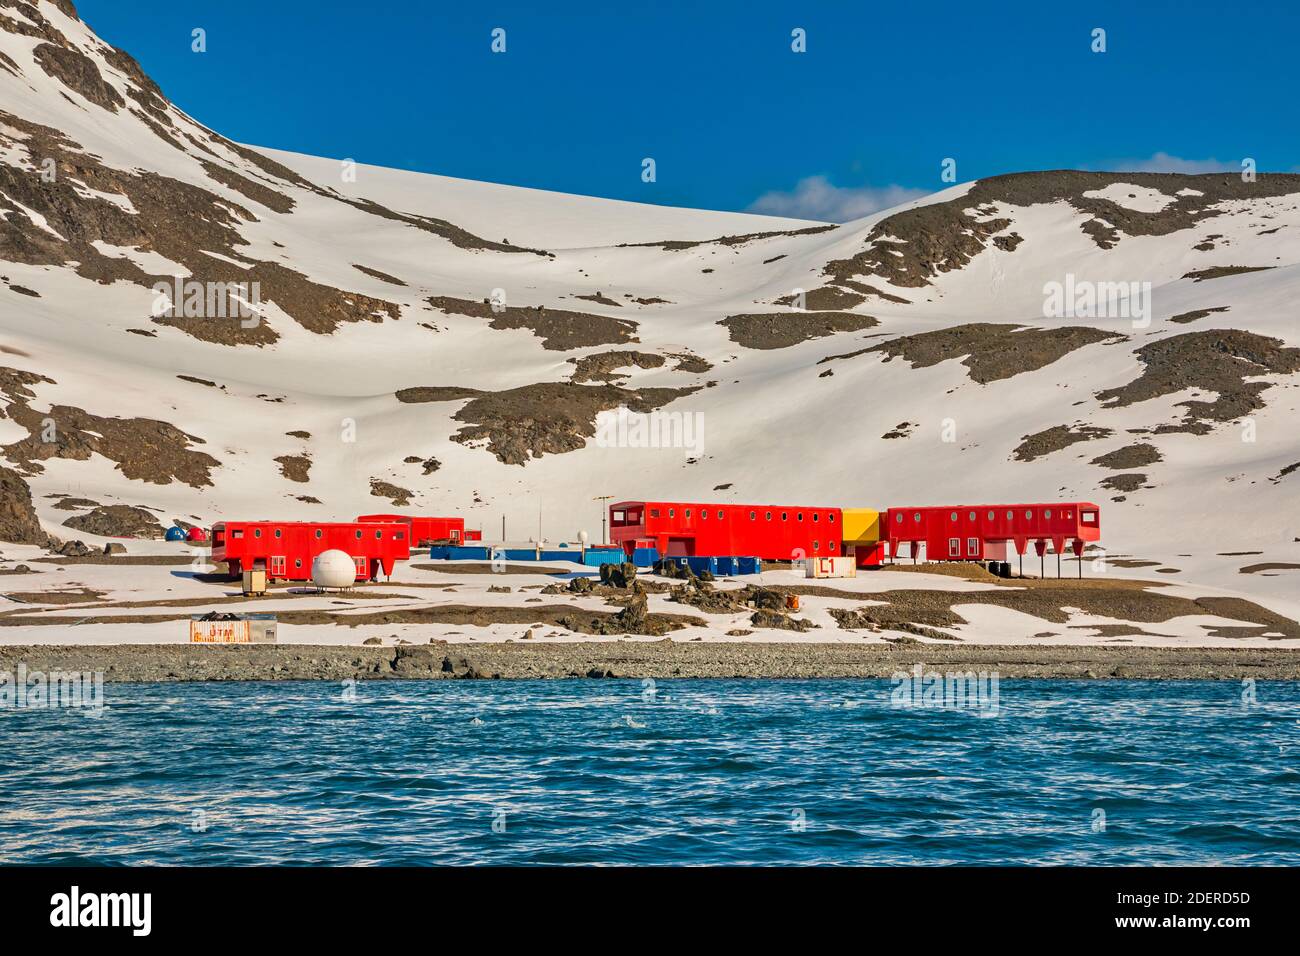 La base scientifica spagnola Juan Carlos i Antartico, sulle Isole Shetland meridionali, Antartide Foto Stock